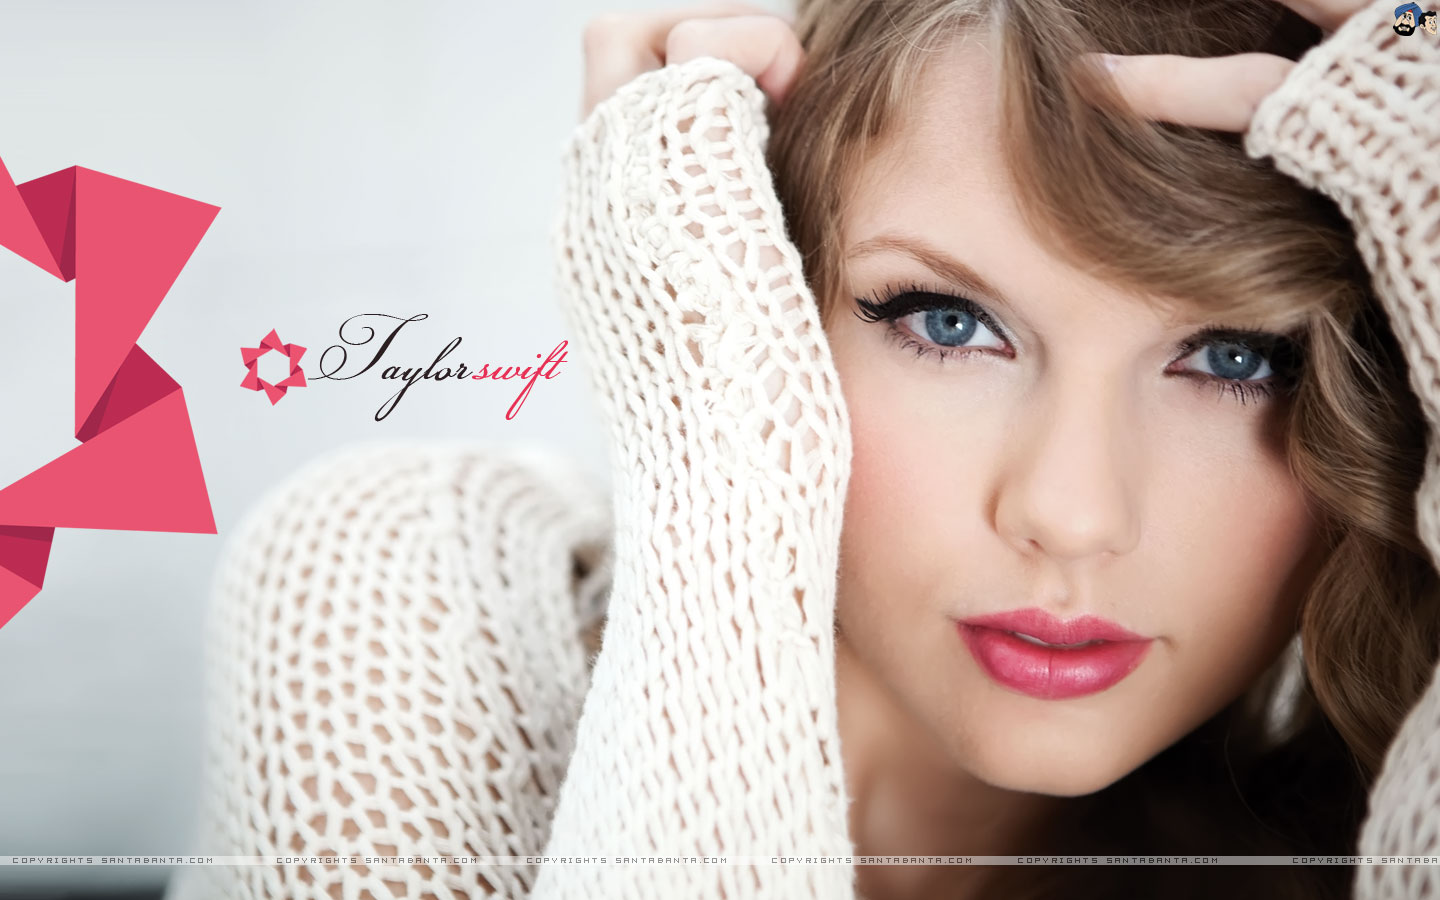 Taylor Swift Desktop Wallpaper Santa Banta